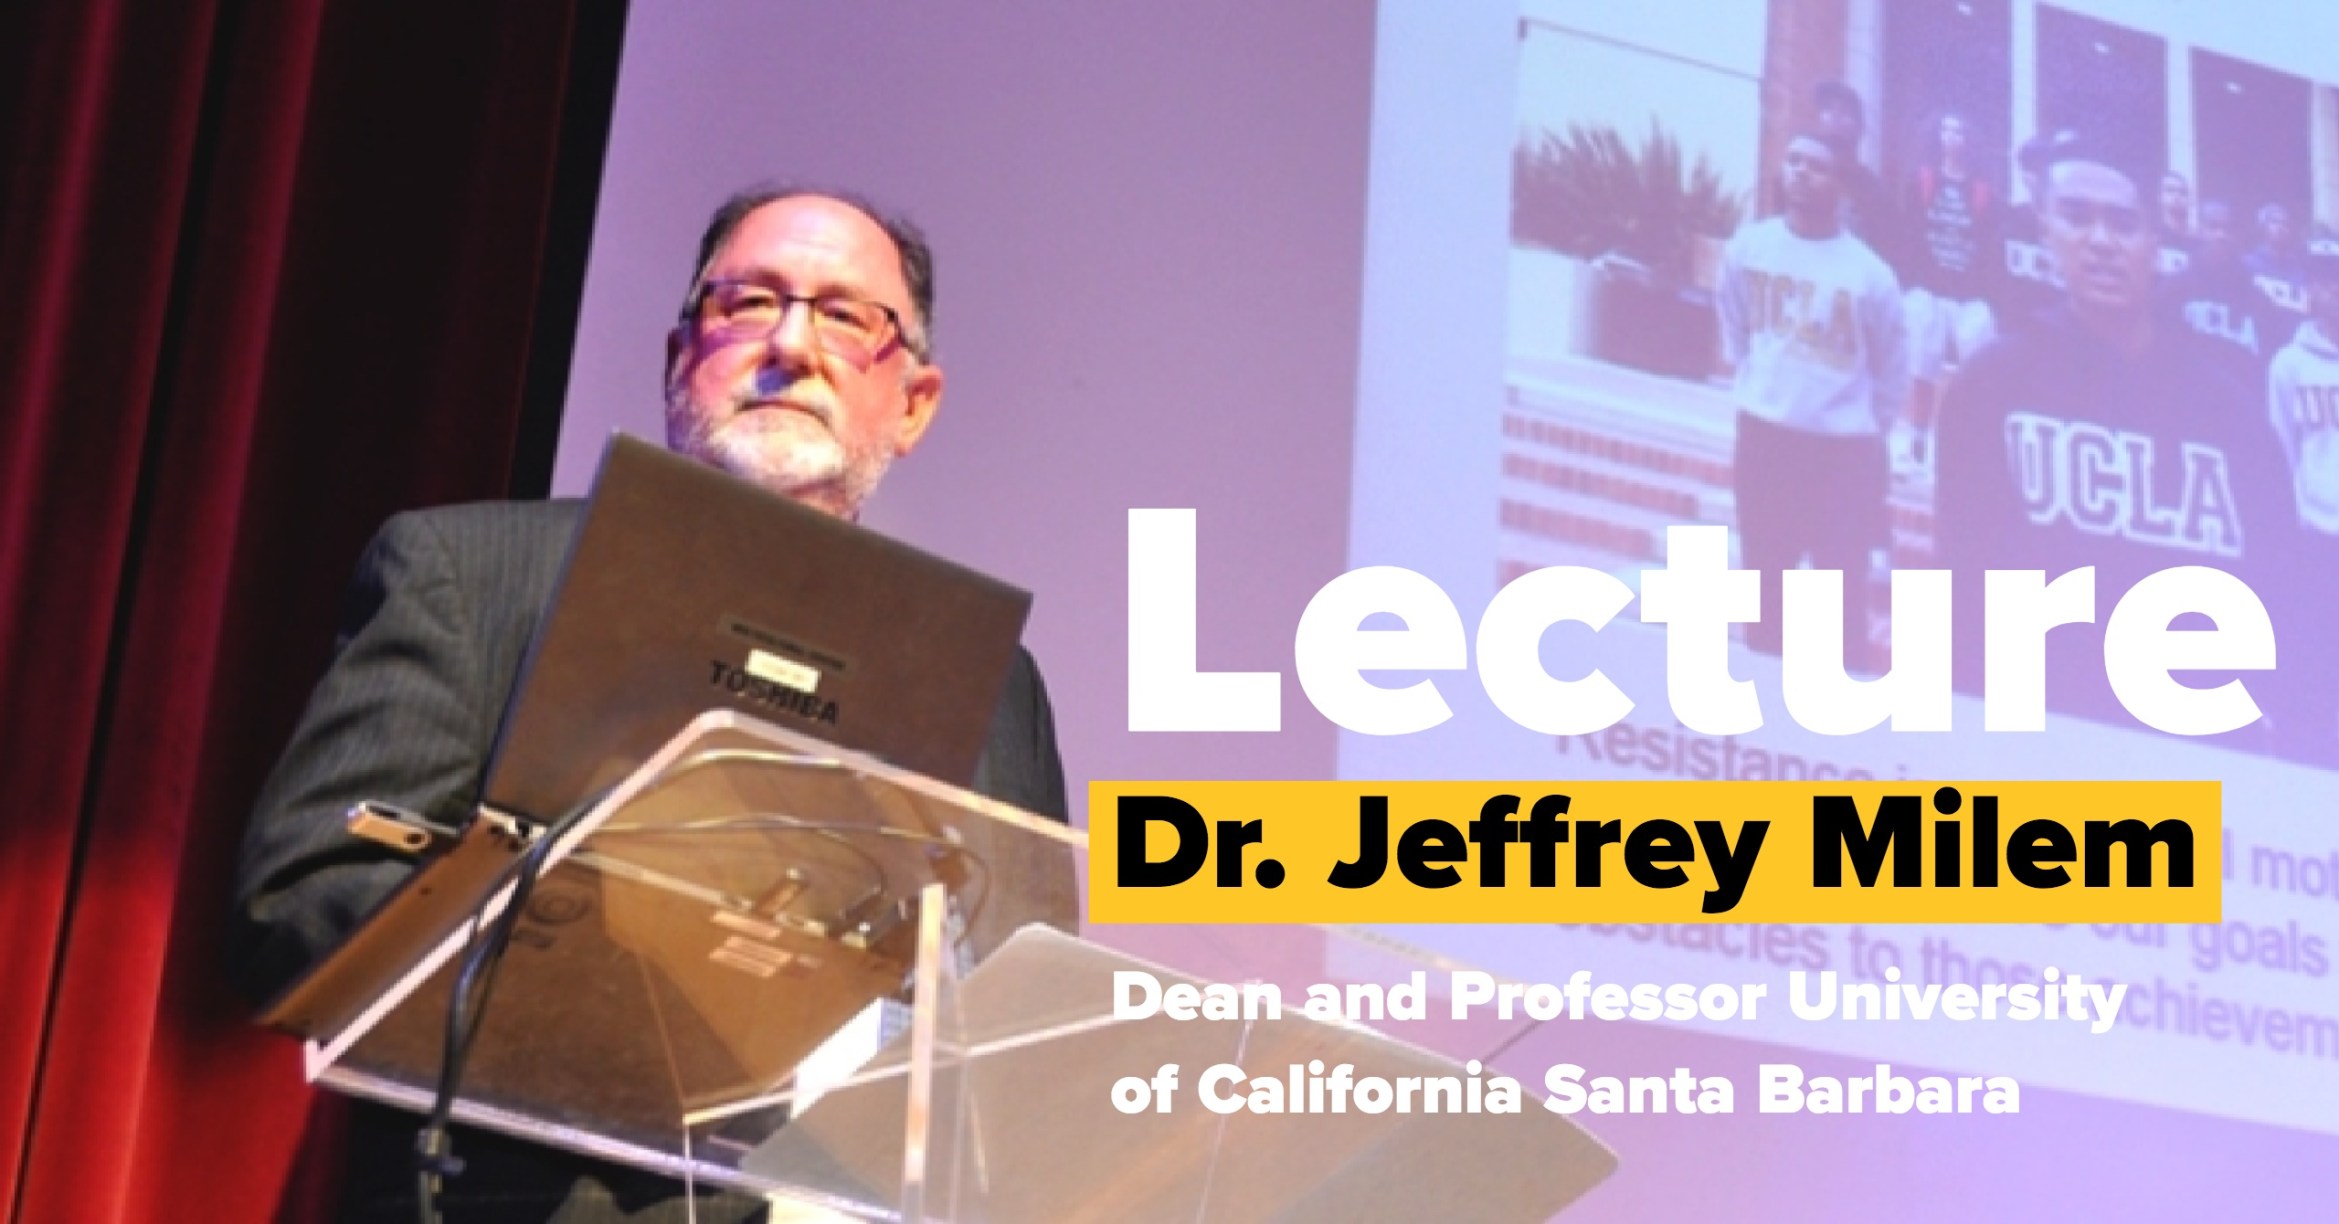 Dr. Jeffrey Milem, Dean and Professor University of California Santa Barbara